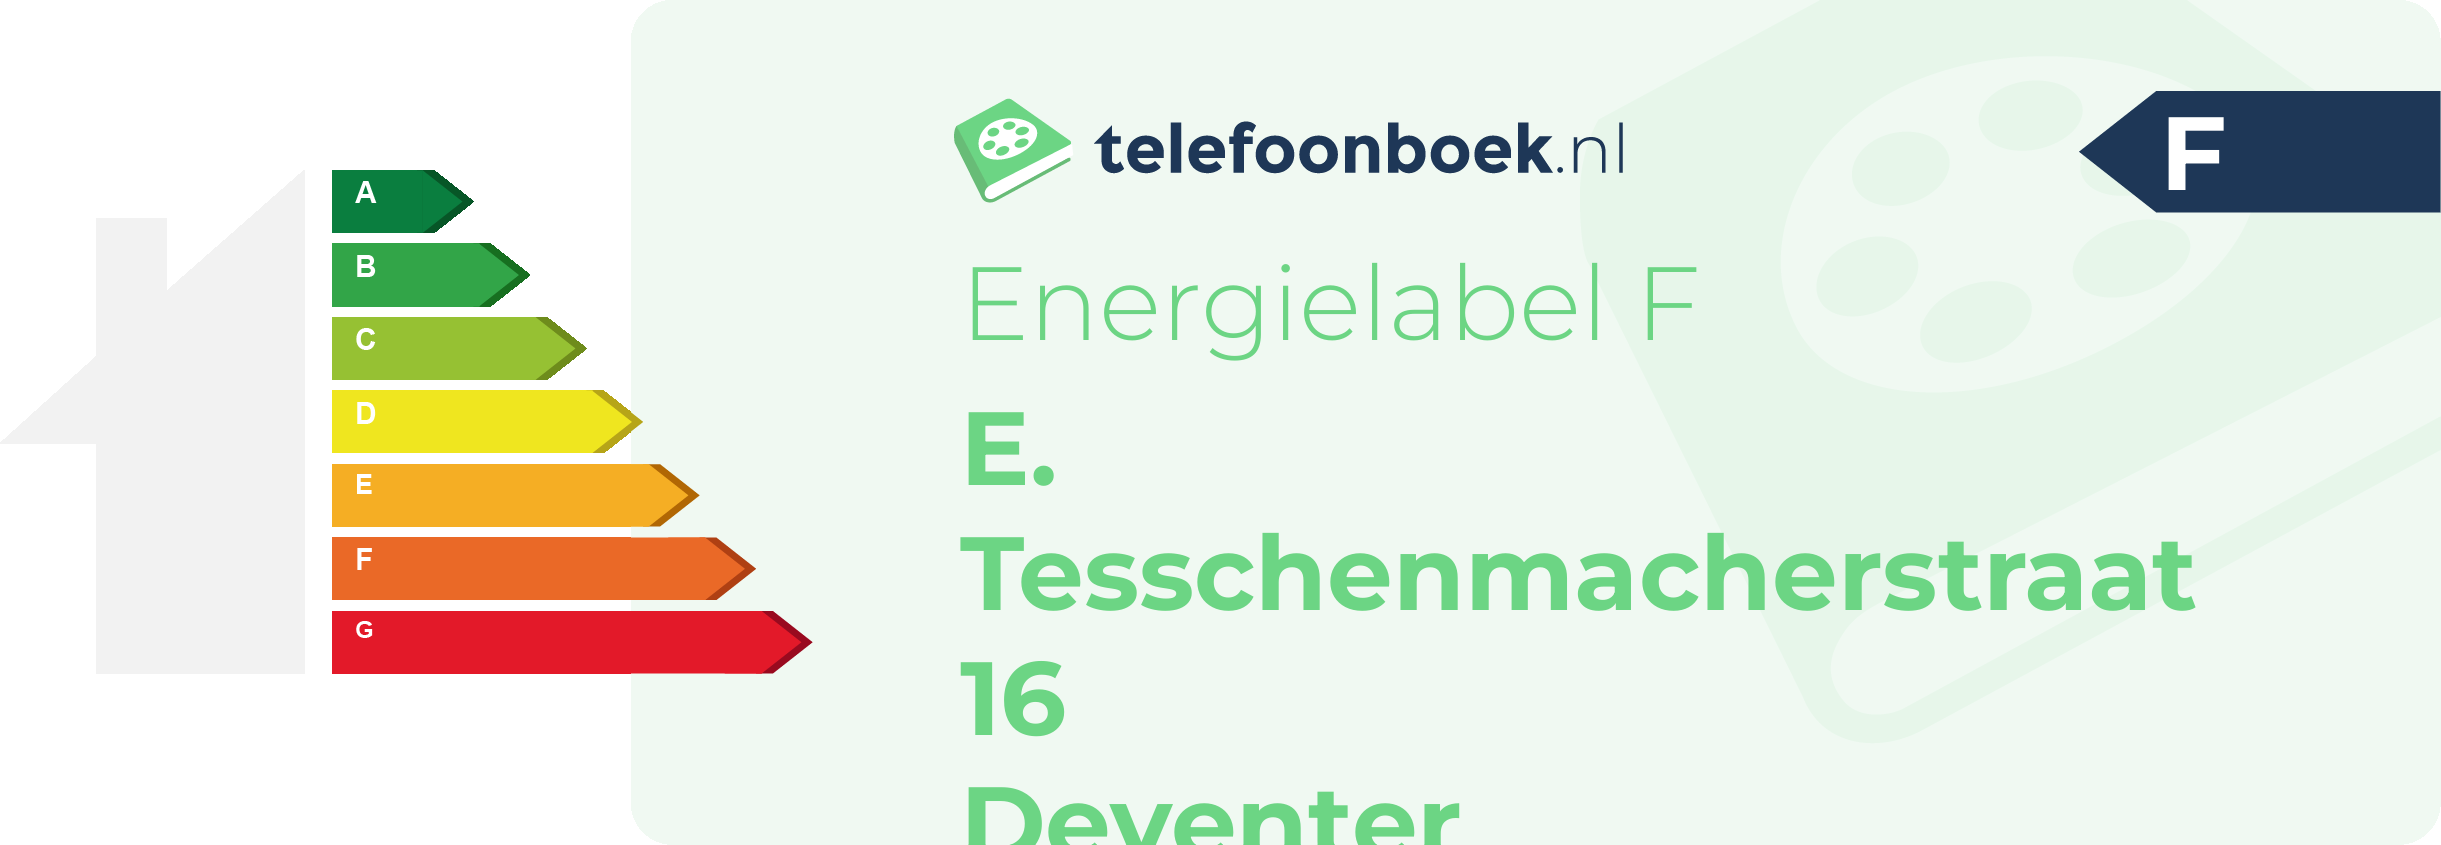 Energielabel E. Tesschenmacherstraat 16 Deventer